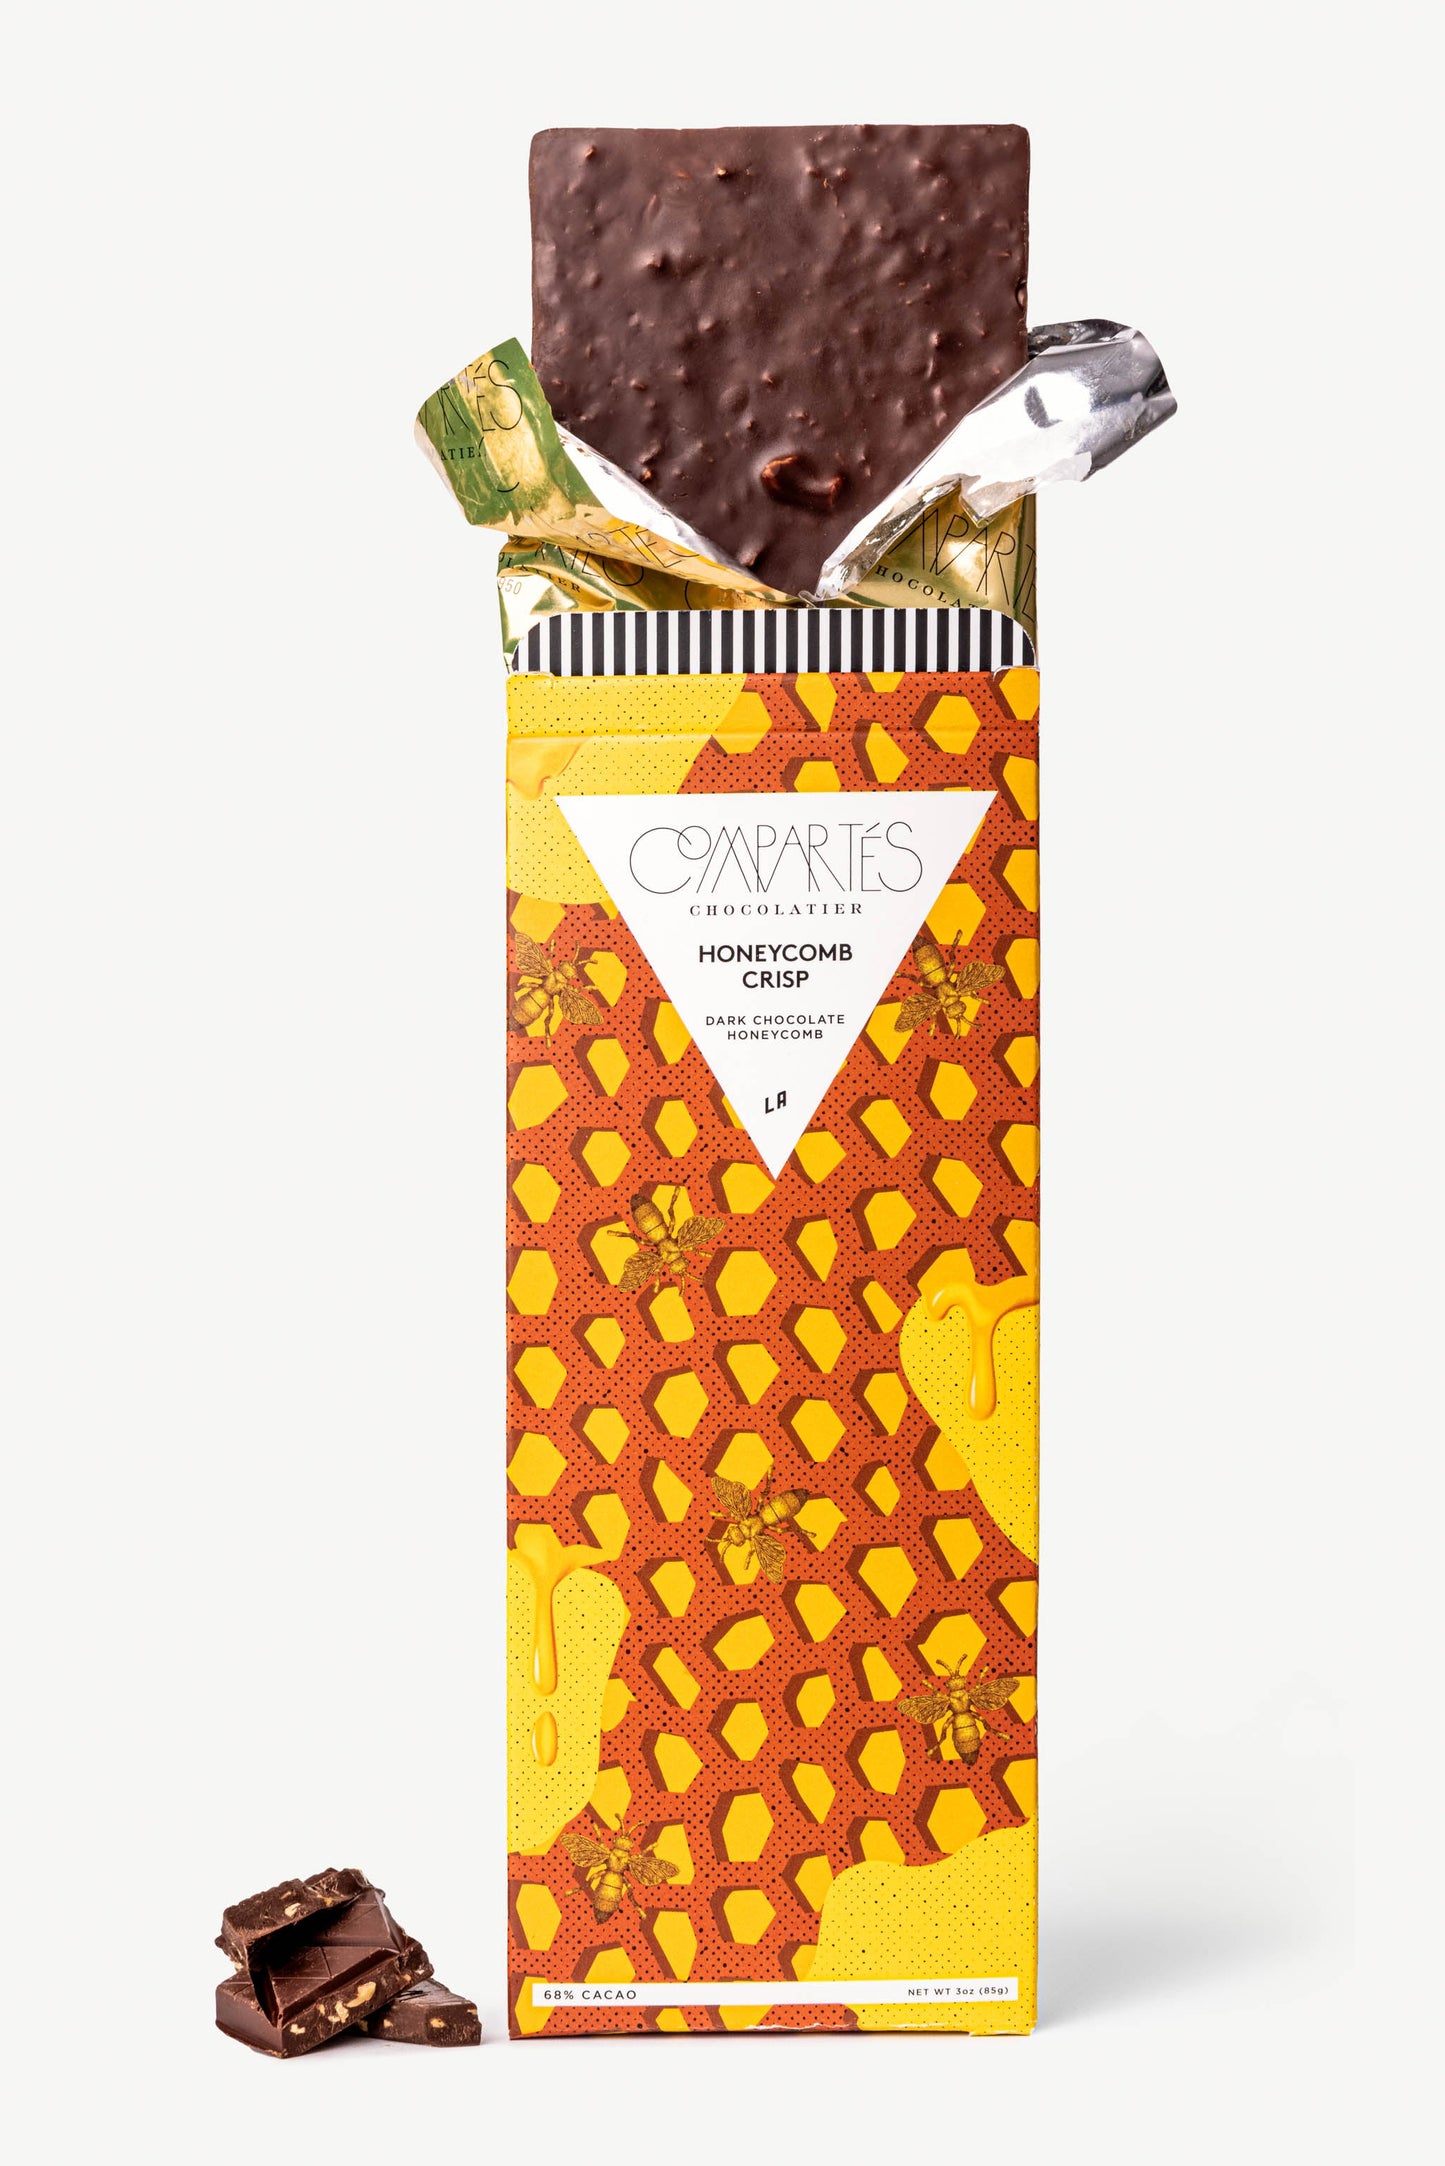 Honeycomb Crisp Gourmet Dark Chocolate Bar  - Compartes